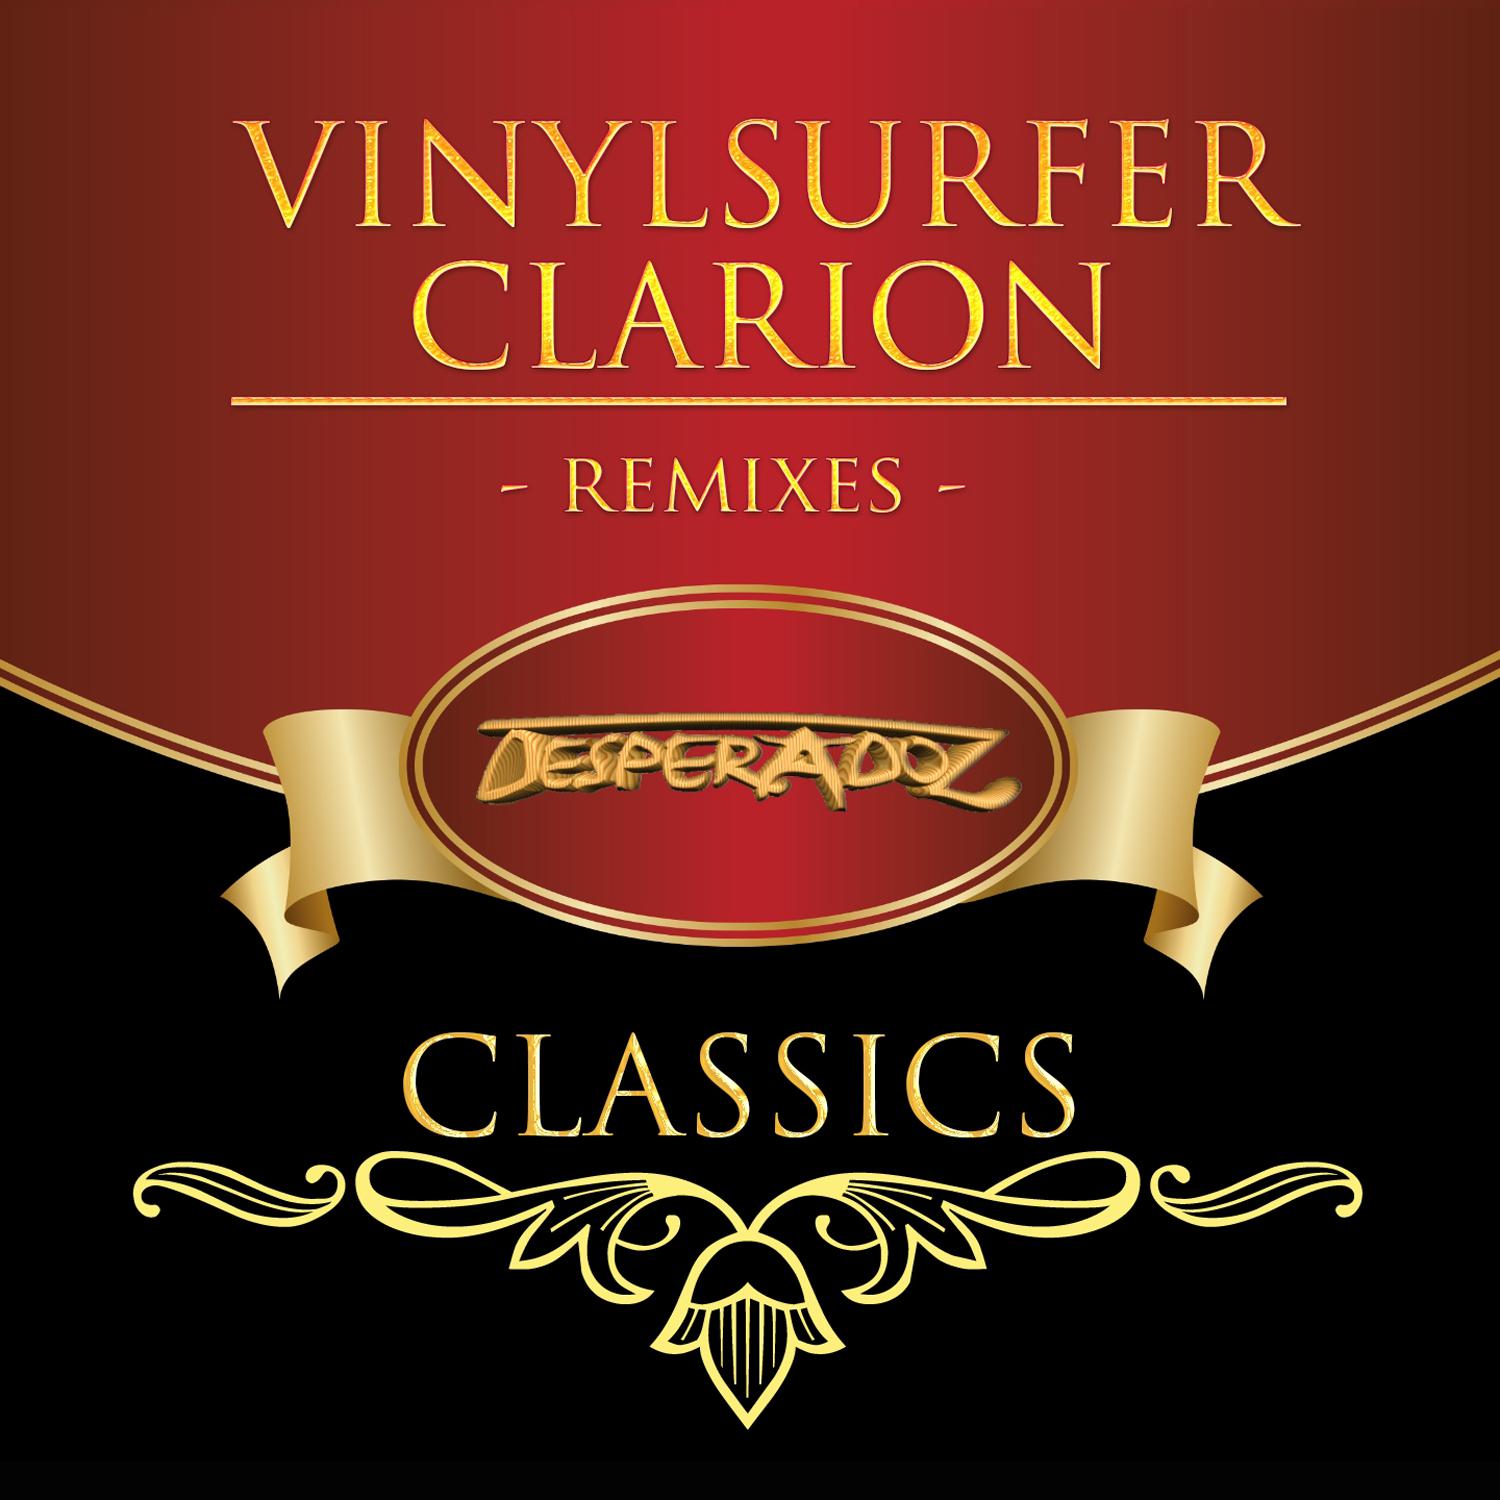 Clarion Remixes